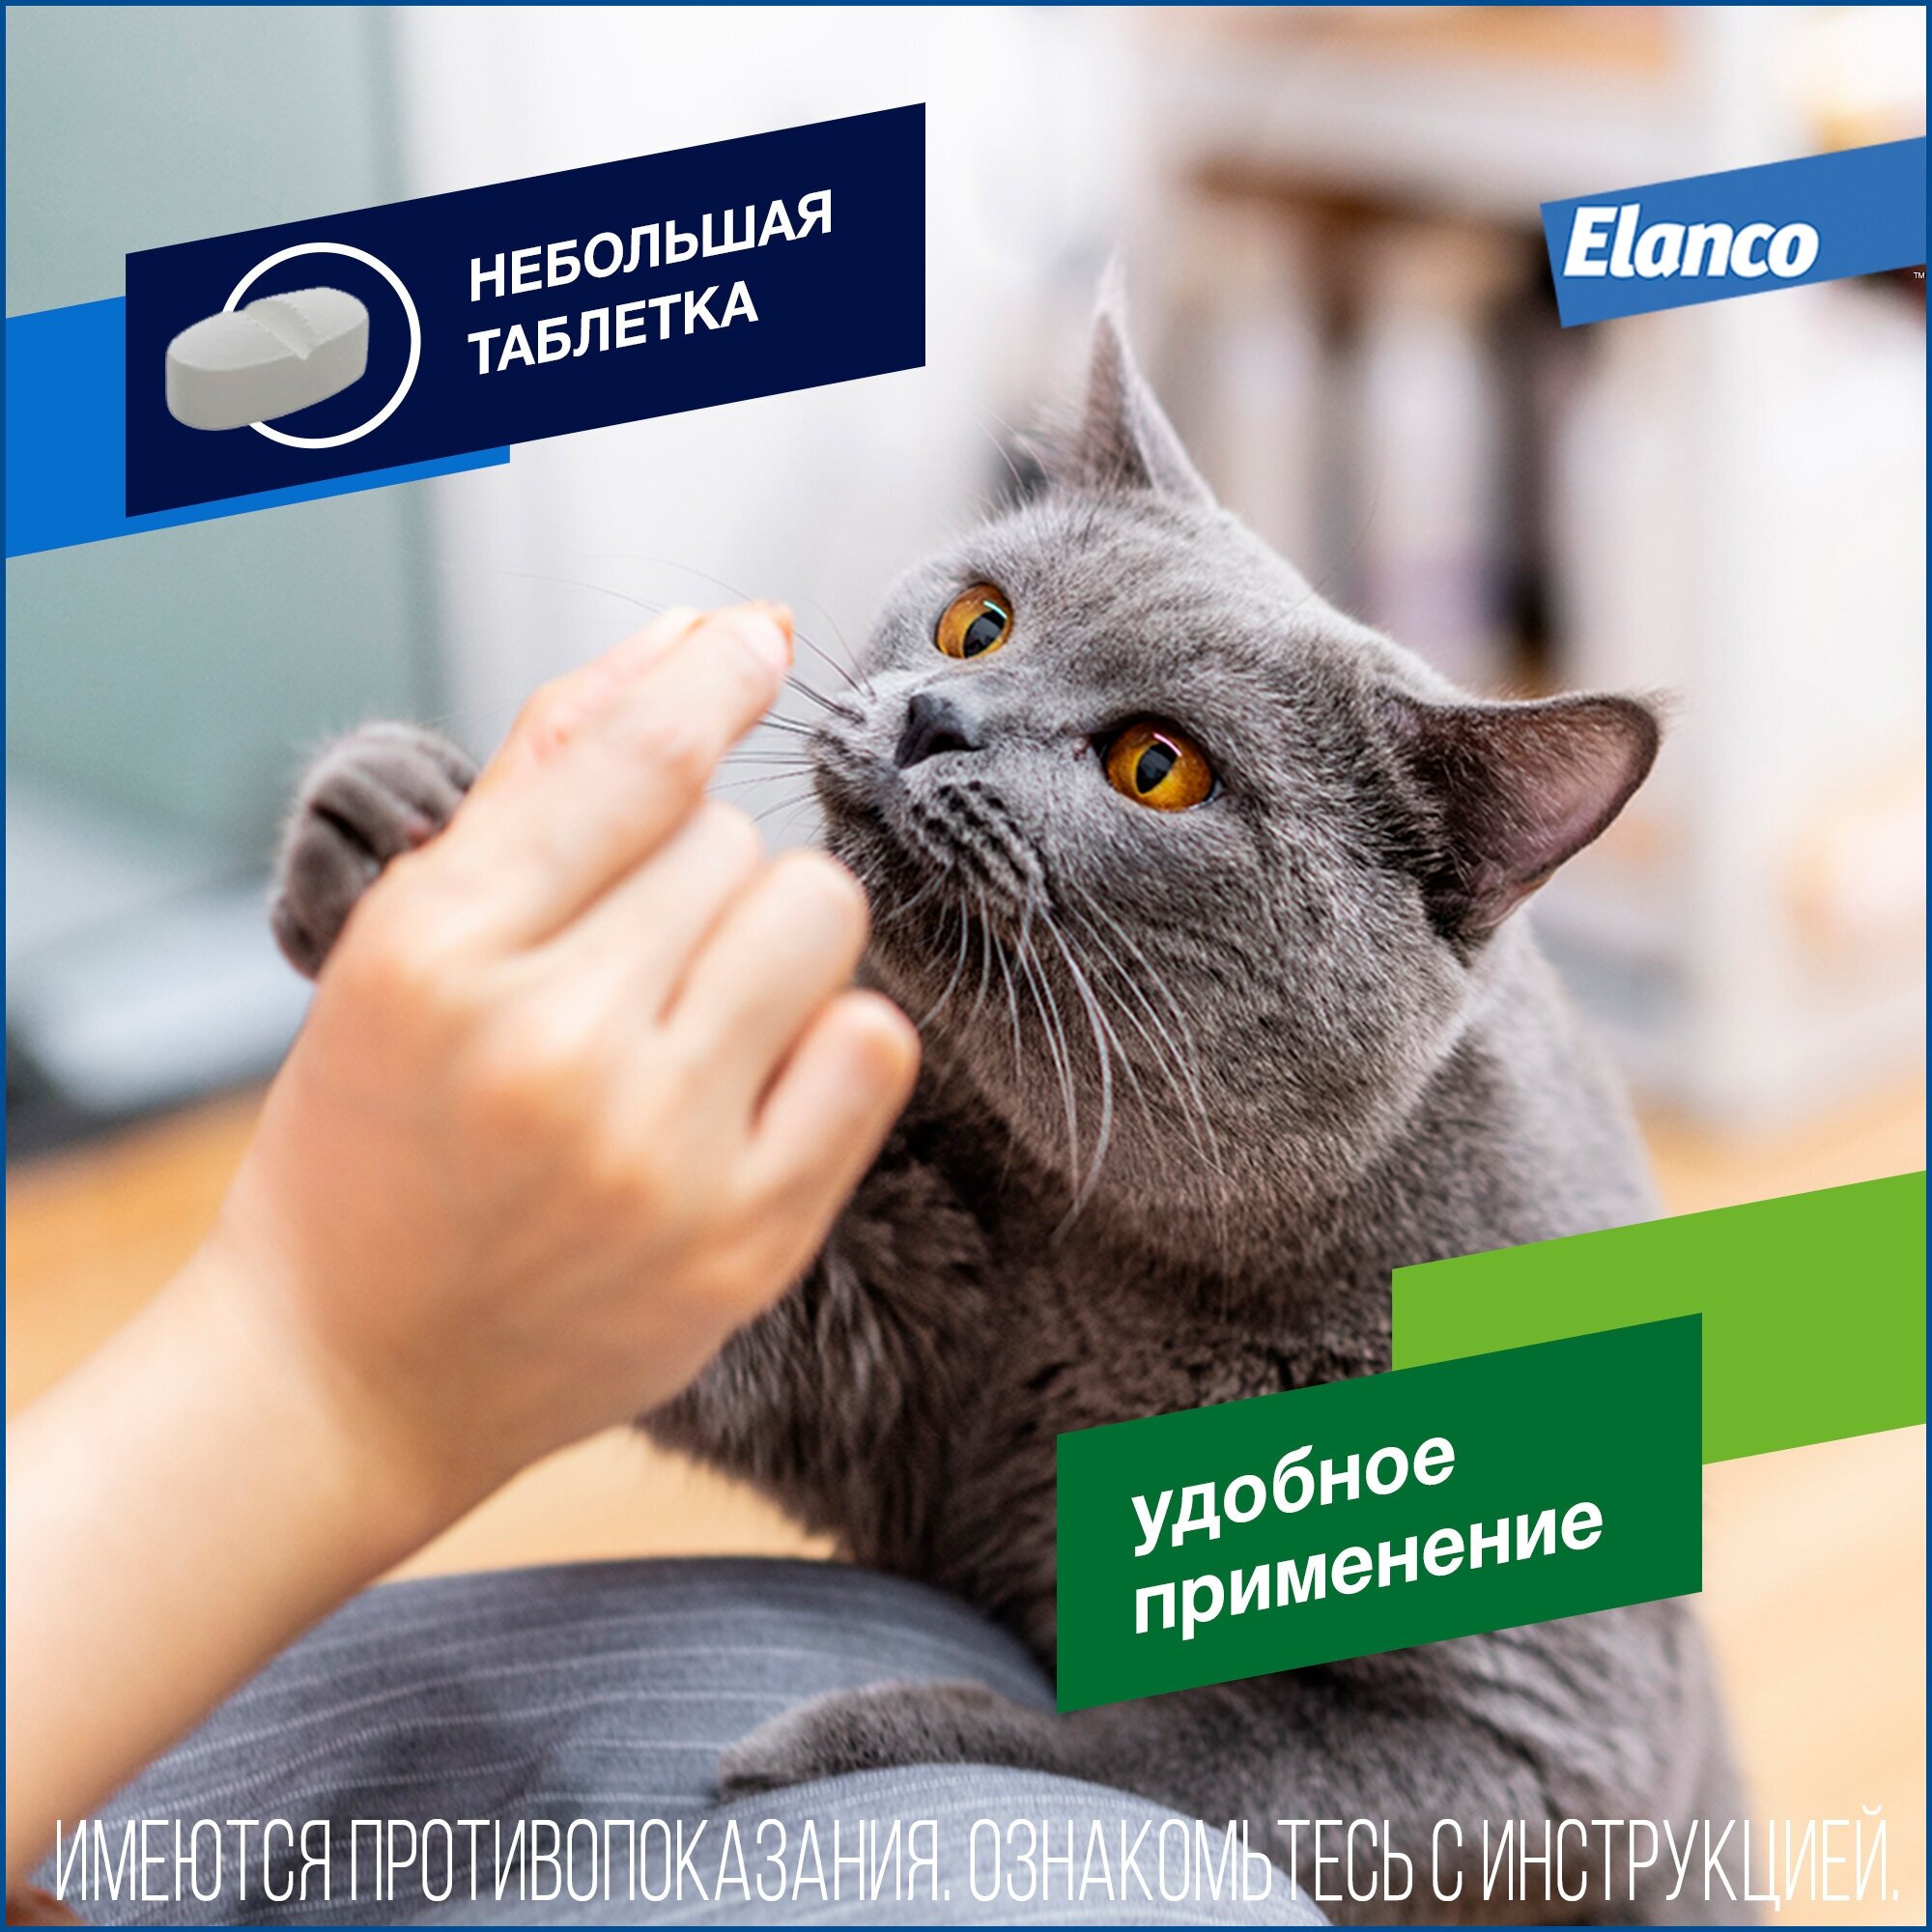 Elanco Дронтал таблетки от гельминтов для котят и кошек, 2 таб.